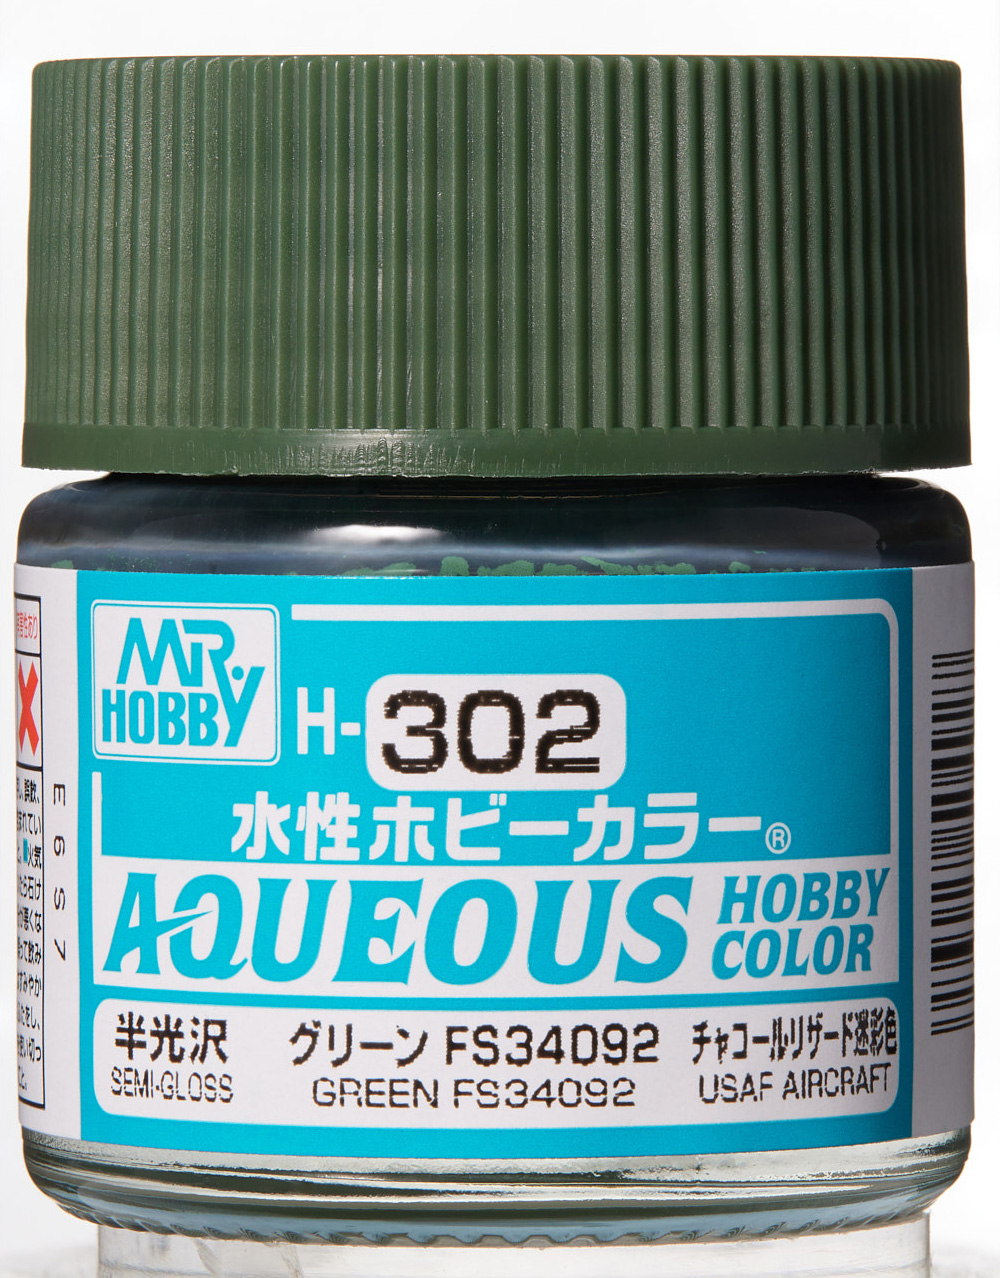 Mr. Aqueous Hobby Color - Green FS34092 - H302 - Grün FS34092